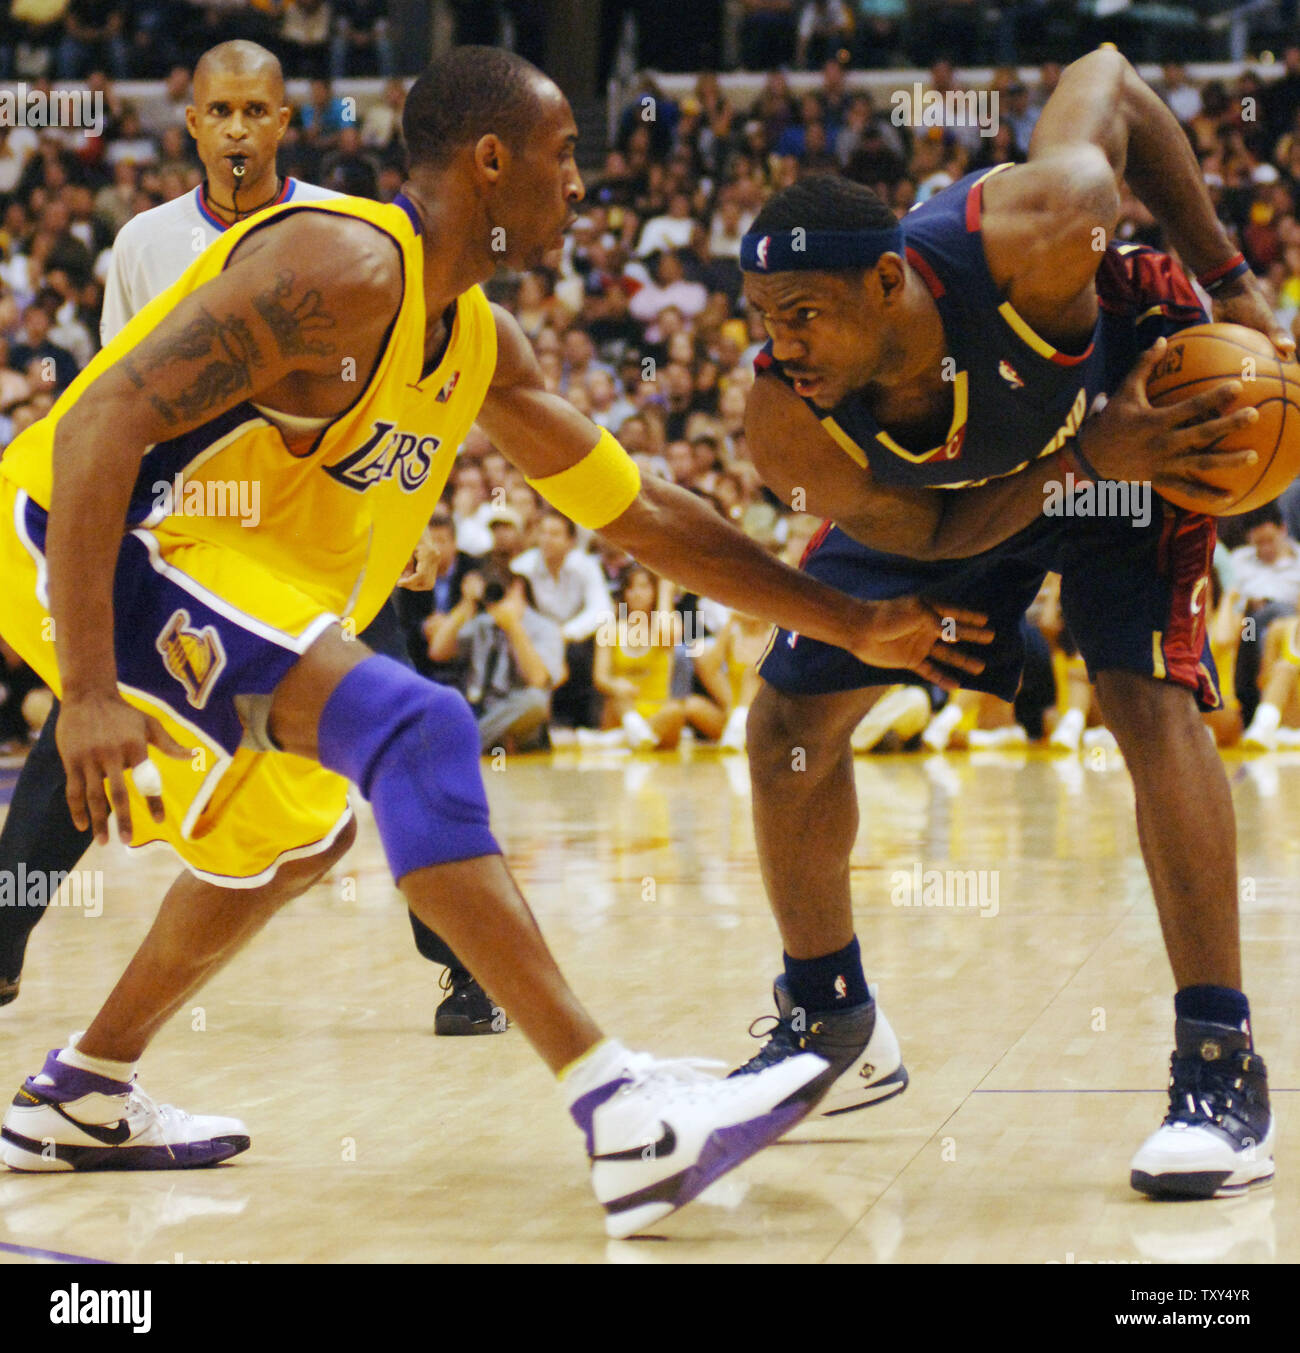 LeBron's Heat hold off Kobe's Lakers 99-90 - The San Diego Union-Tribune